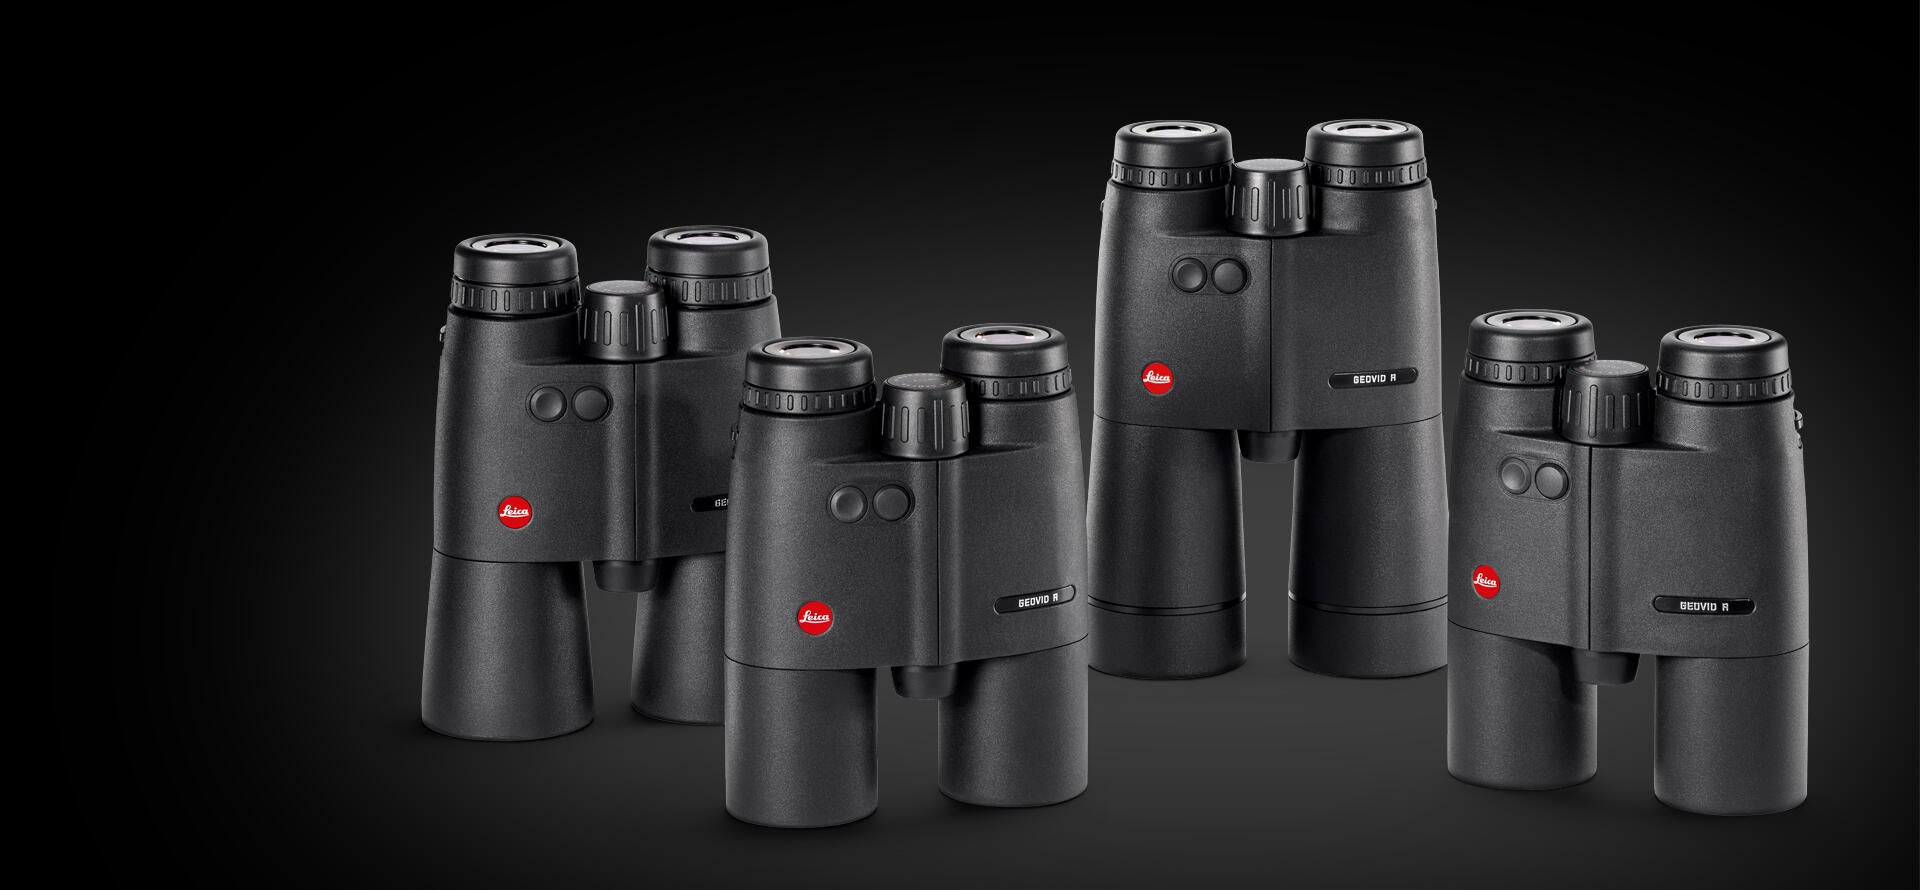 The Leica Geovid R Series Receives a Remaster for Leica's 30th! 